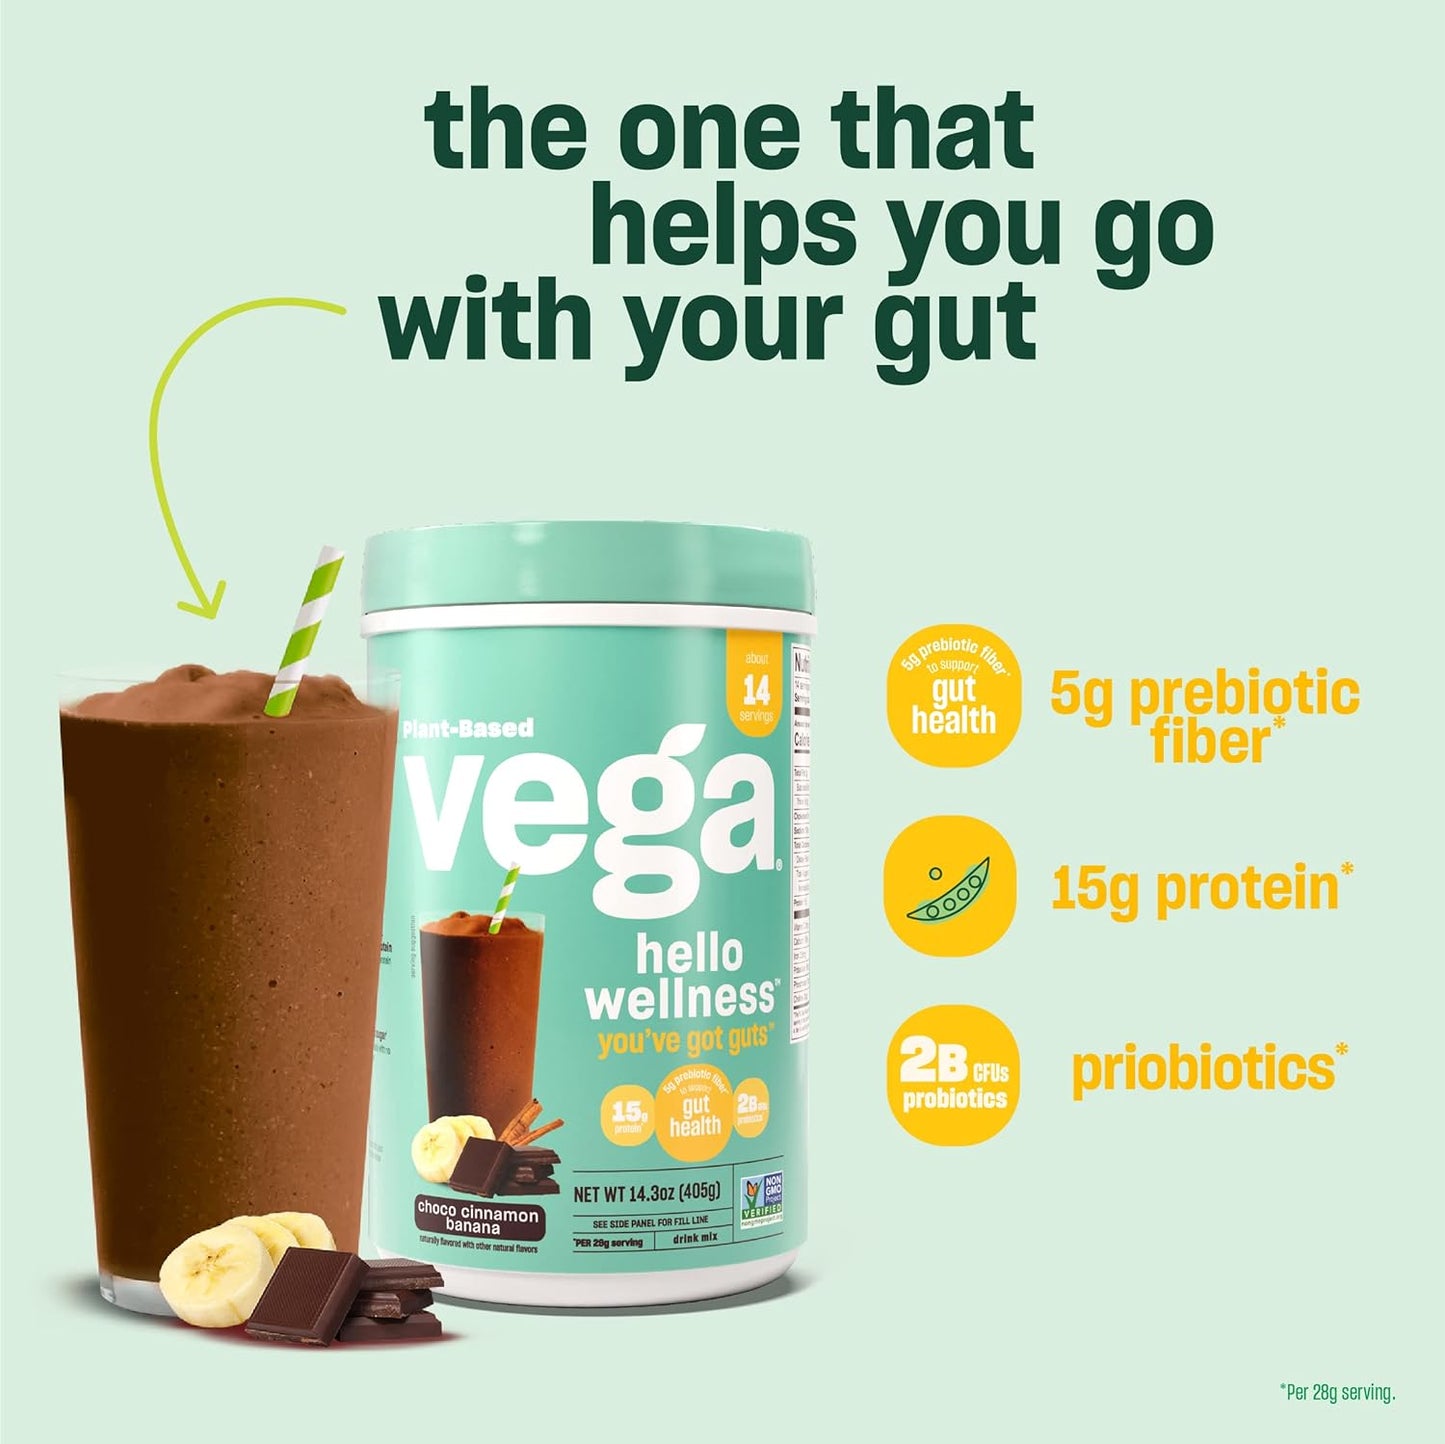 Vega Plant-Based Hello Wellness You've Got Guts Choco Cinnamon Banana 405g